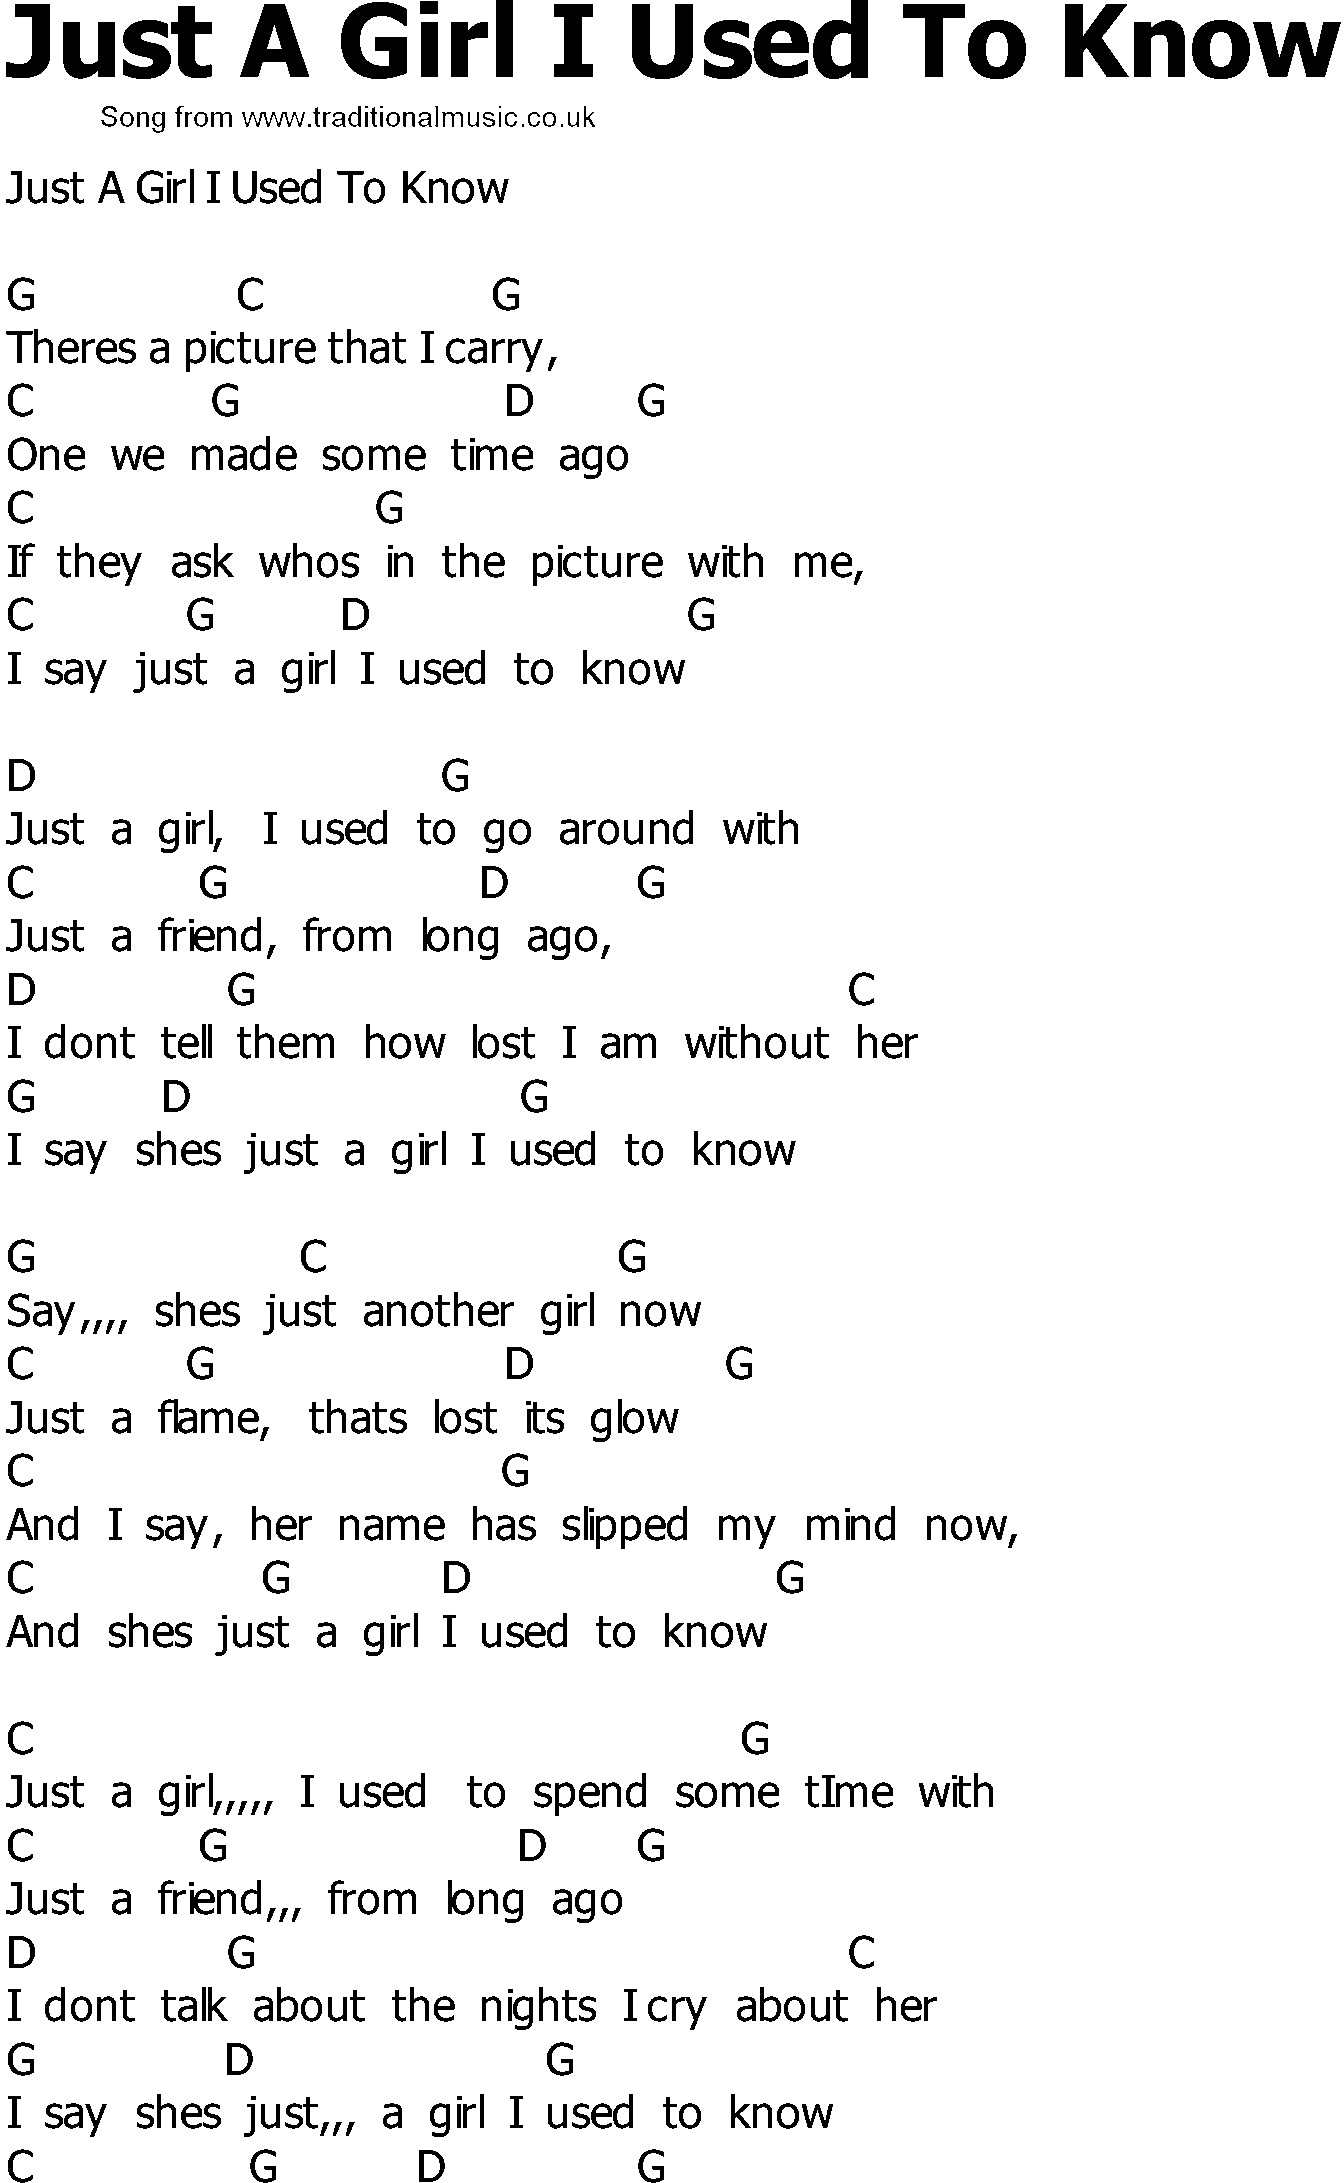 Song lyrics about a girl